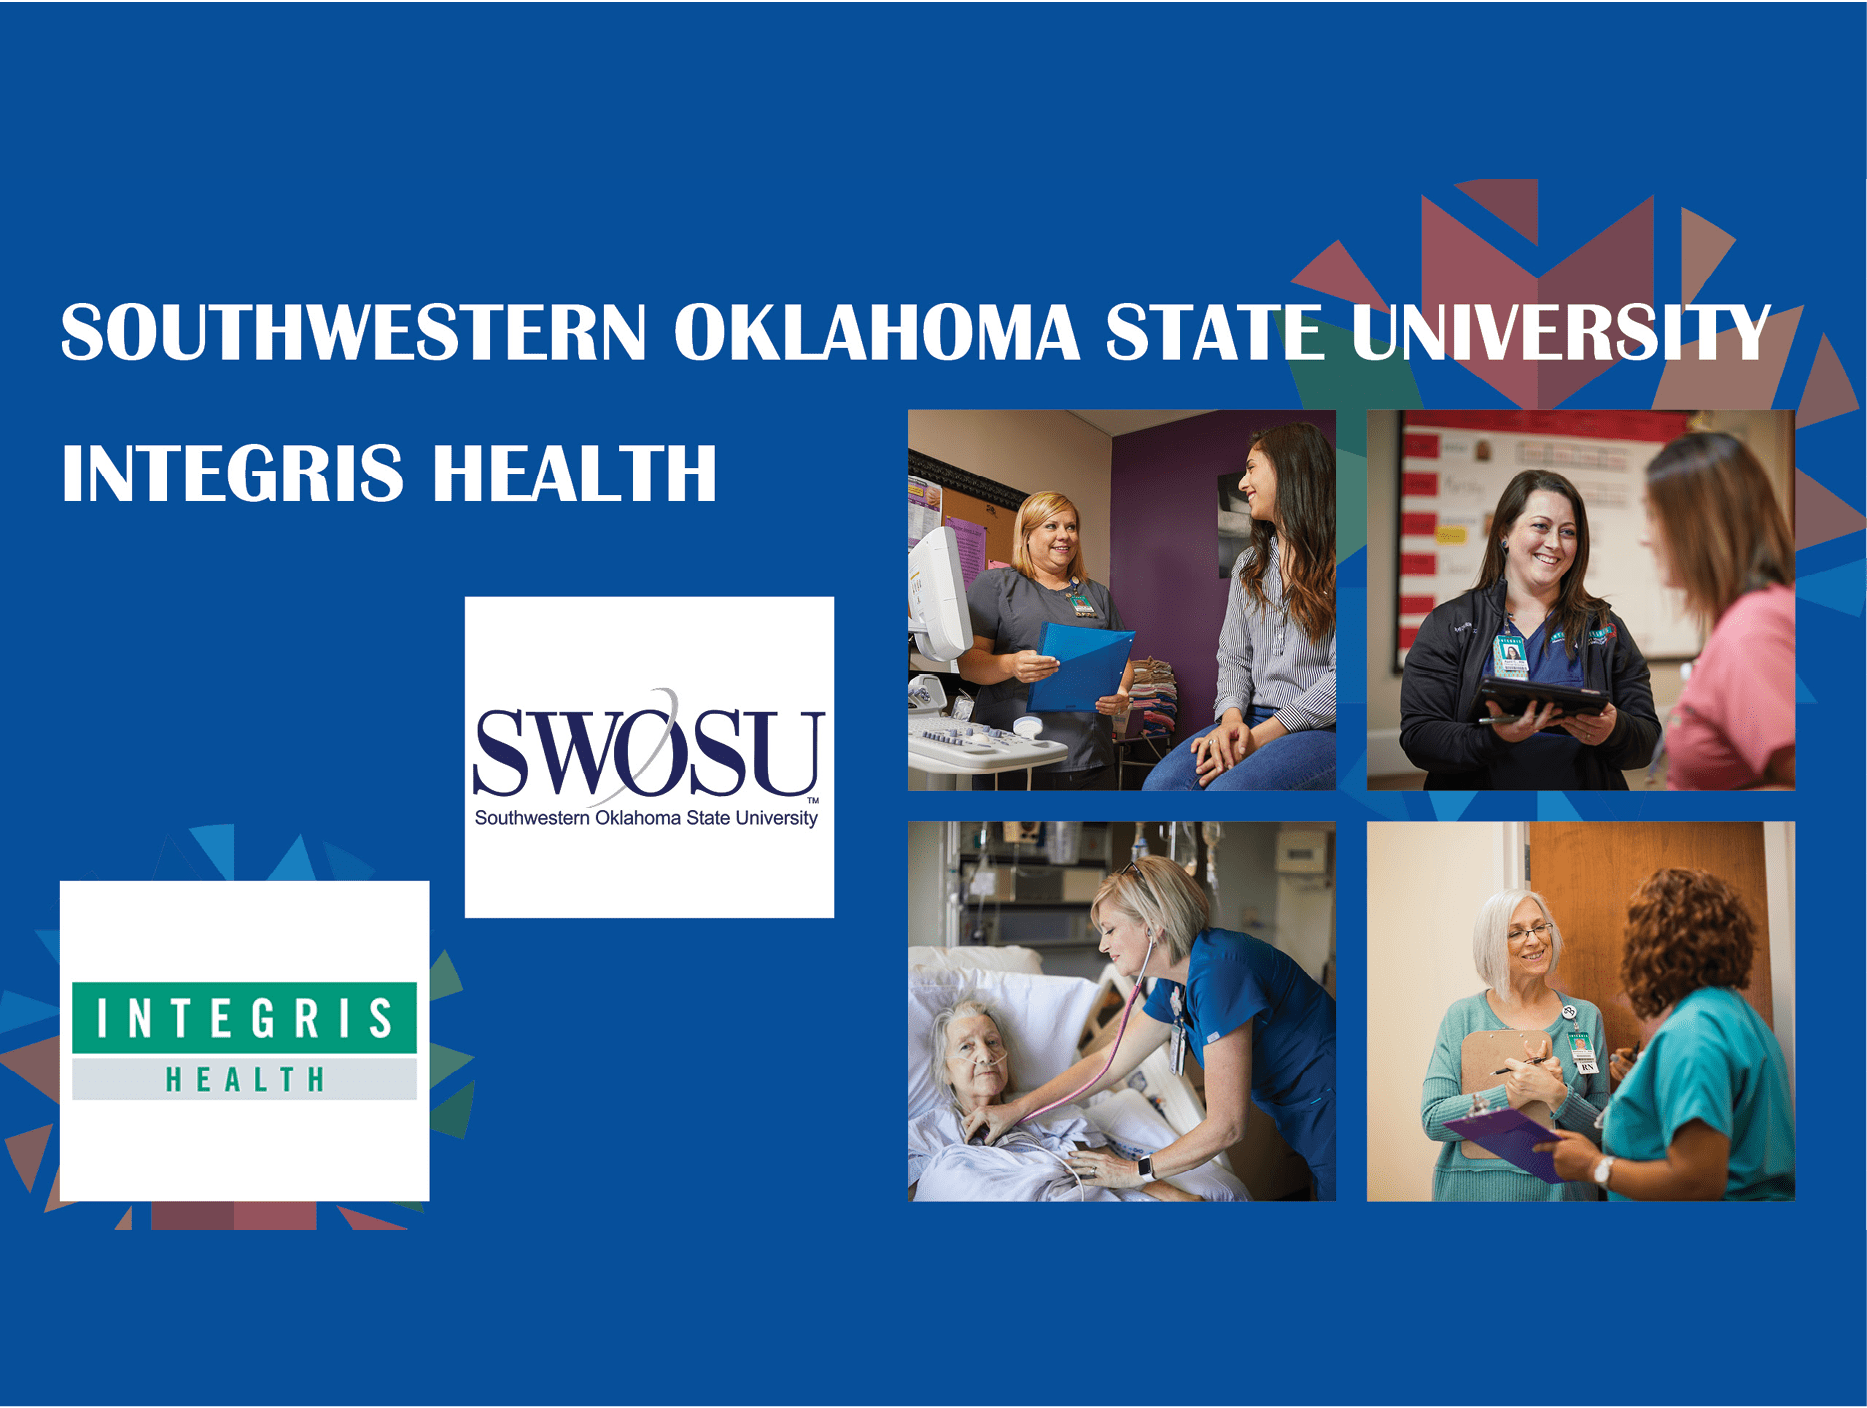 Southwestern Oklahoma State University and INTEGRIS Health